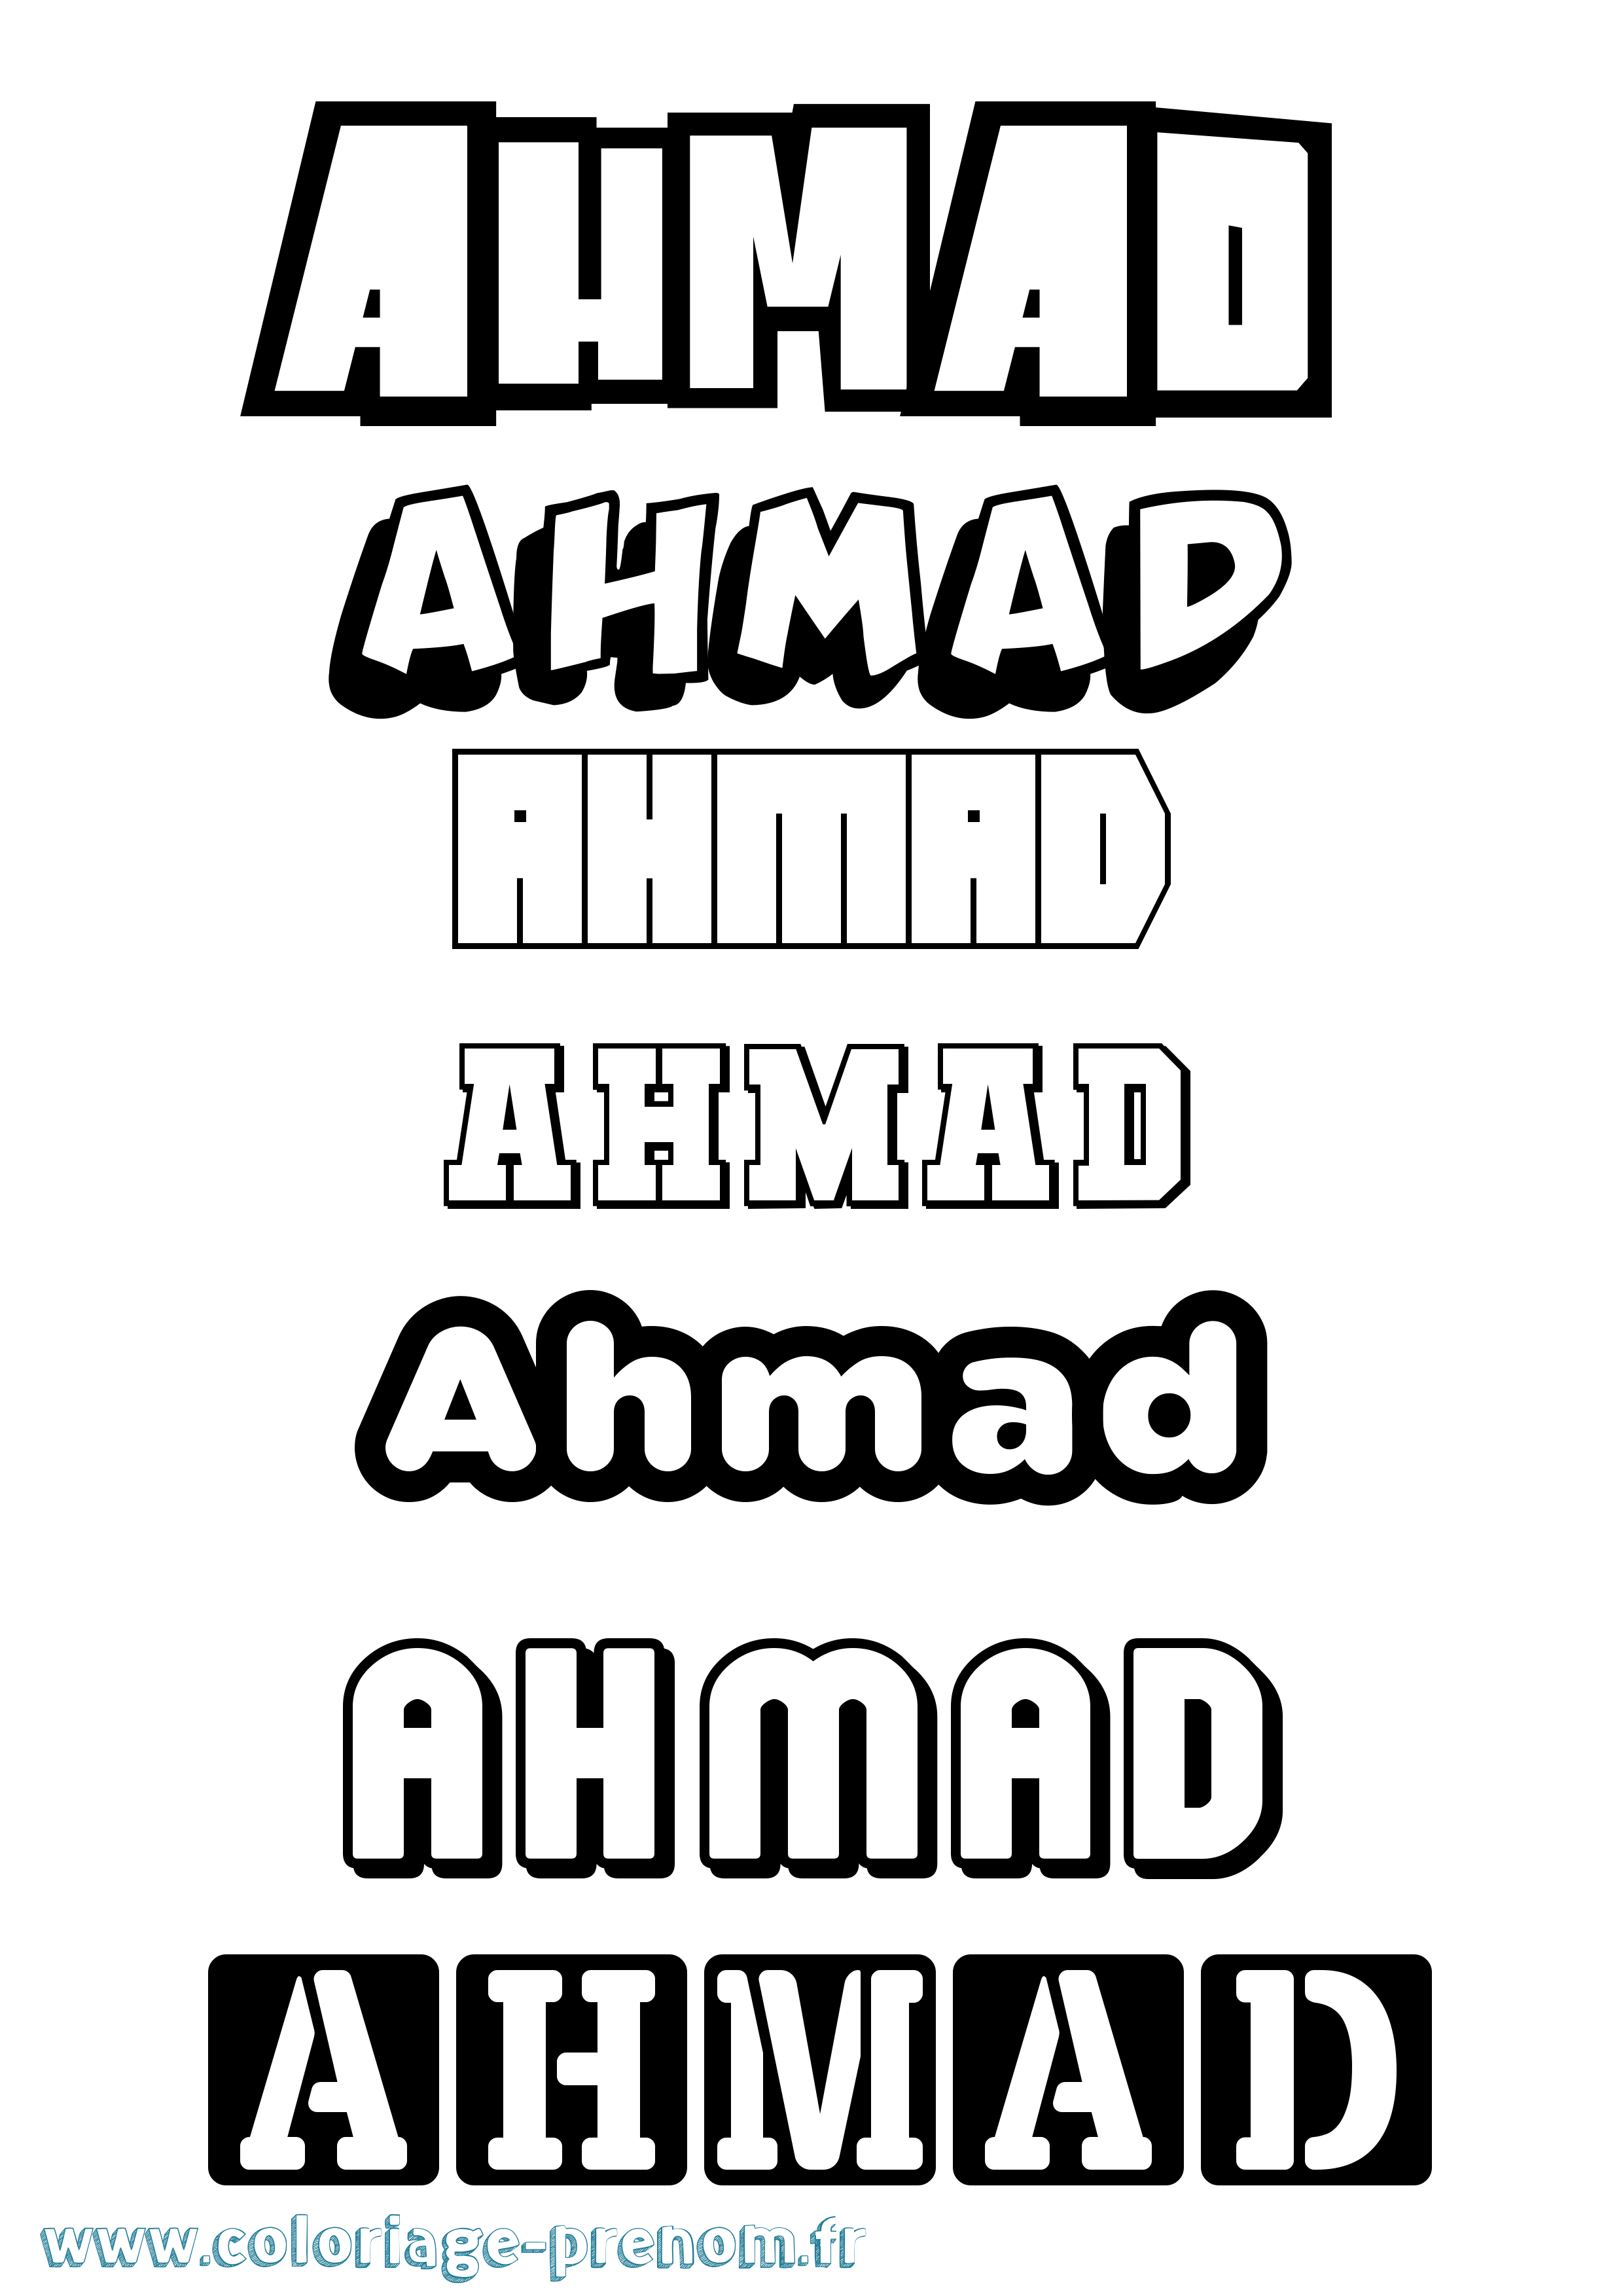 Coloriage prénom Ahmad